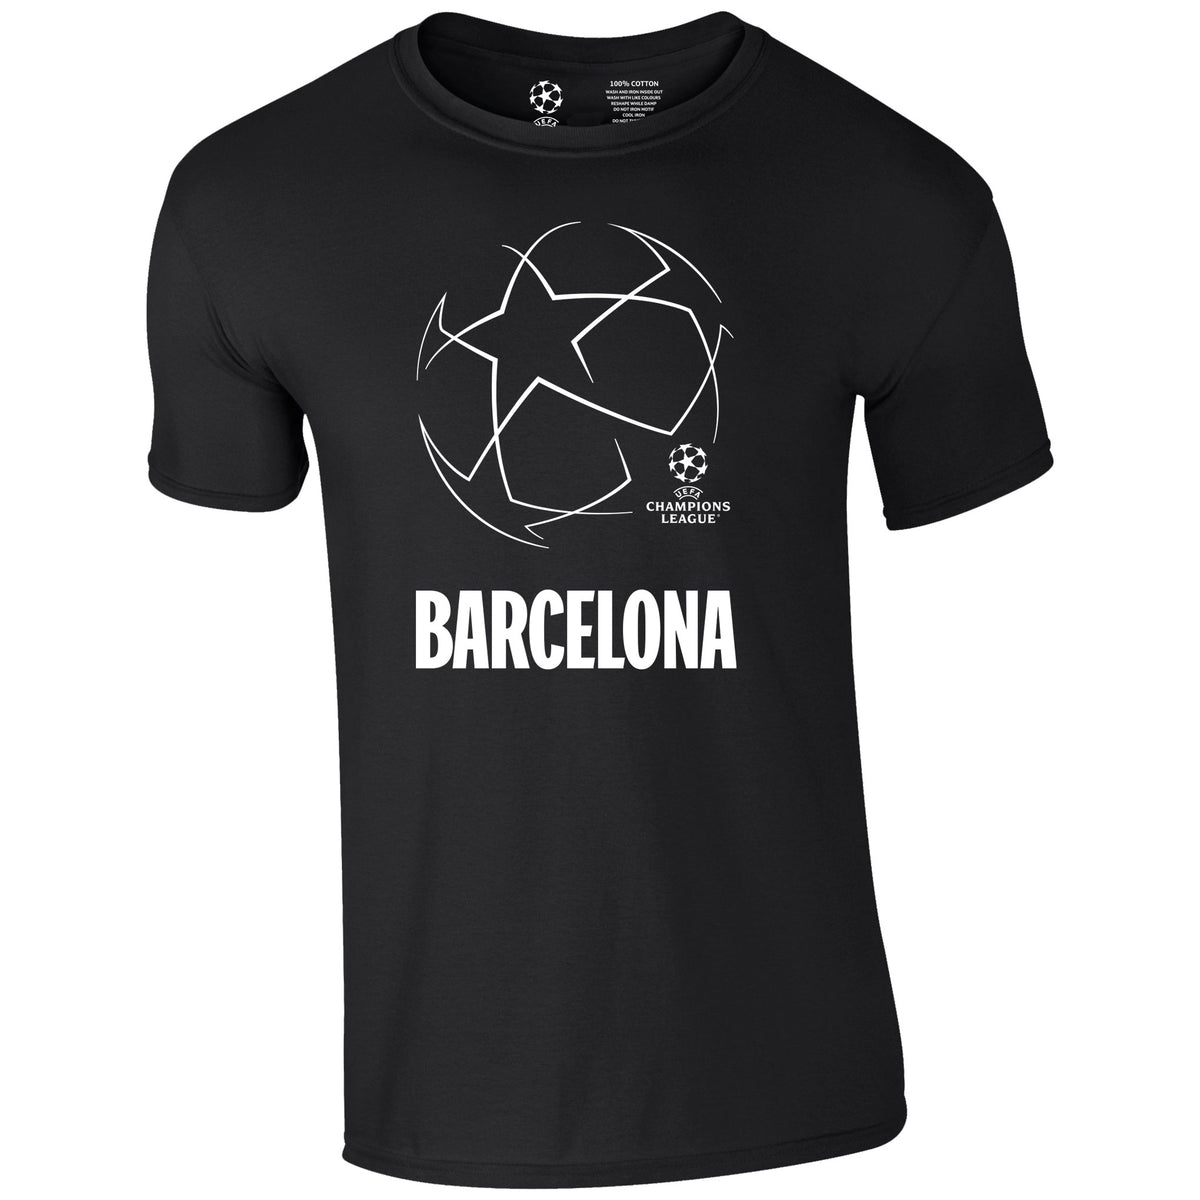 Champions League Starball Barcelona City T-Shirt Black